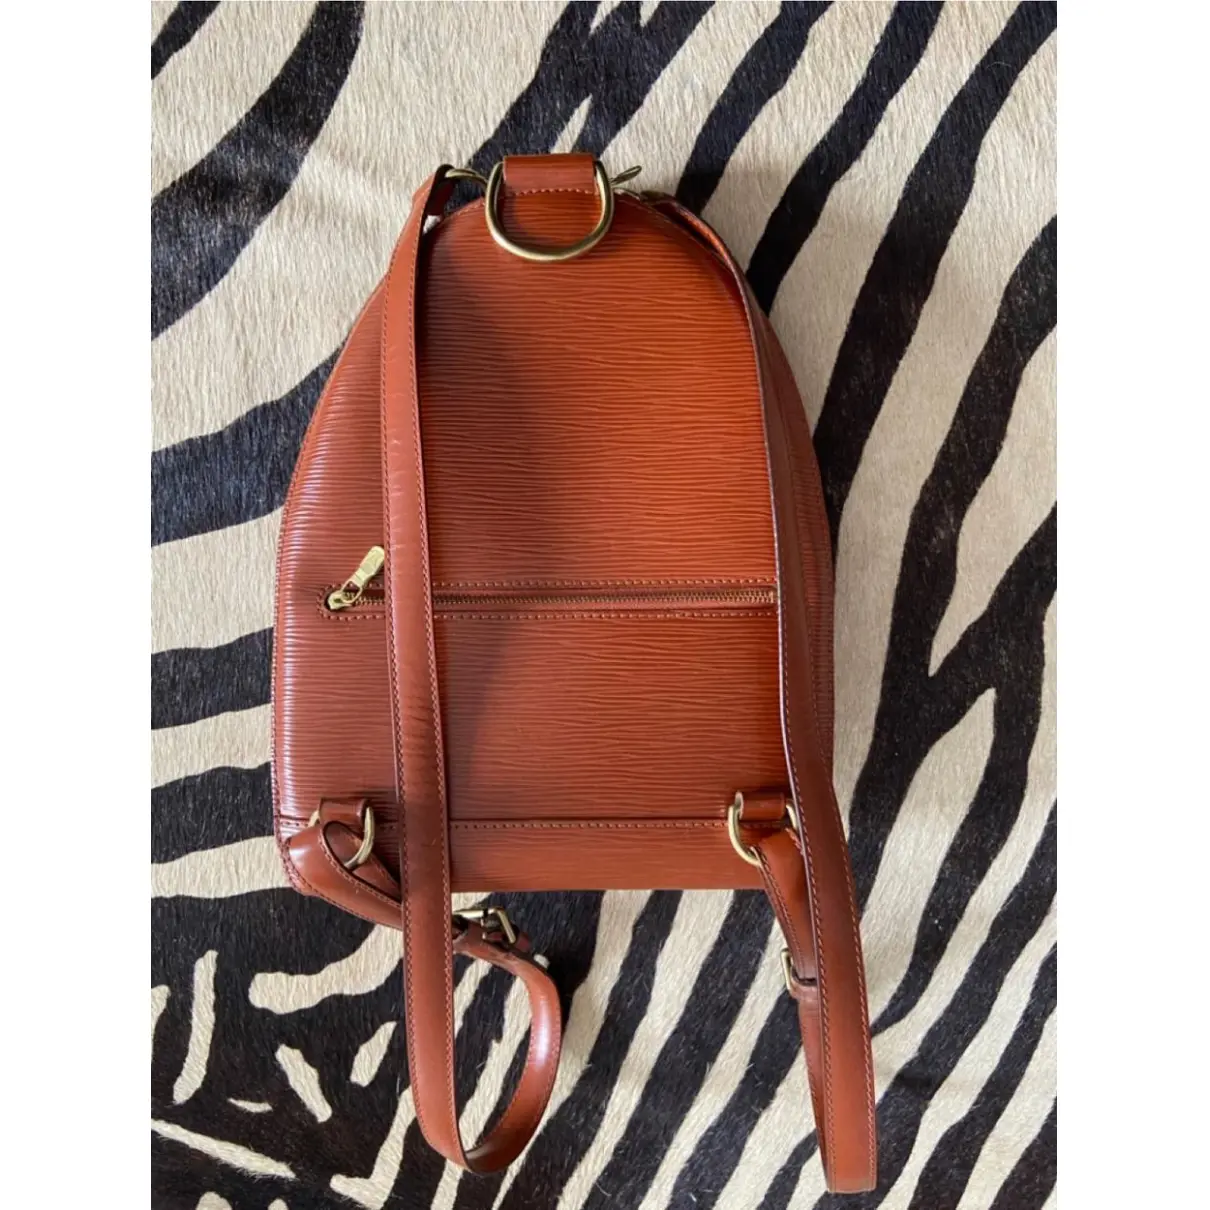 Buy Louis Vuitton Gobelins Vintage leather backpack online